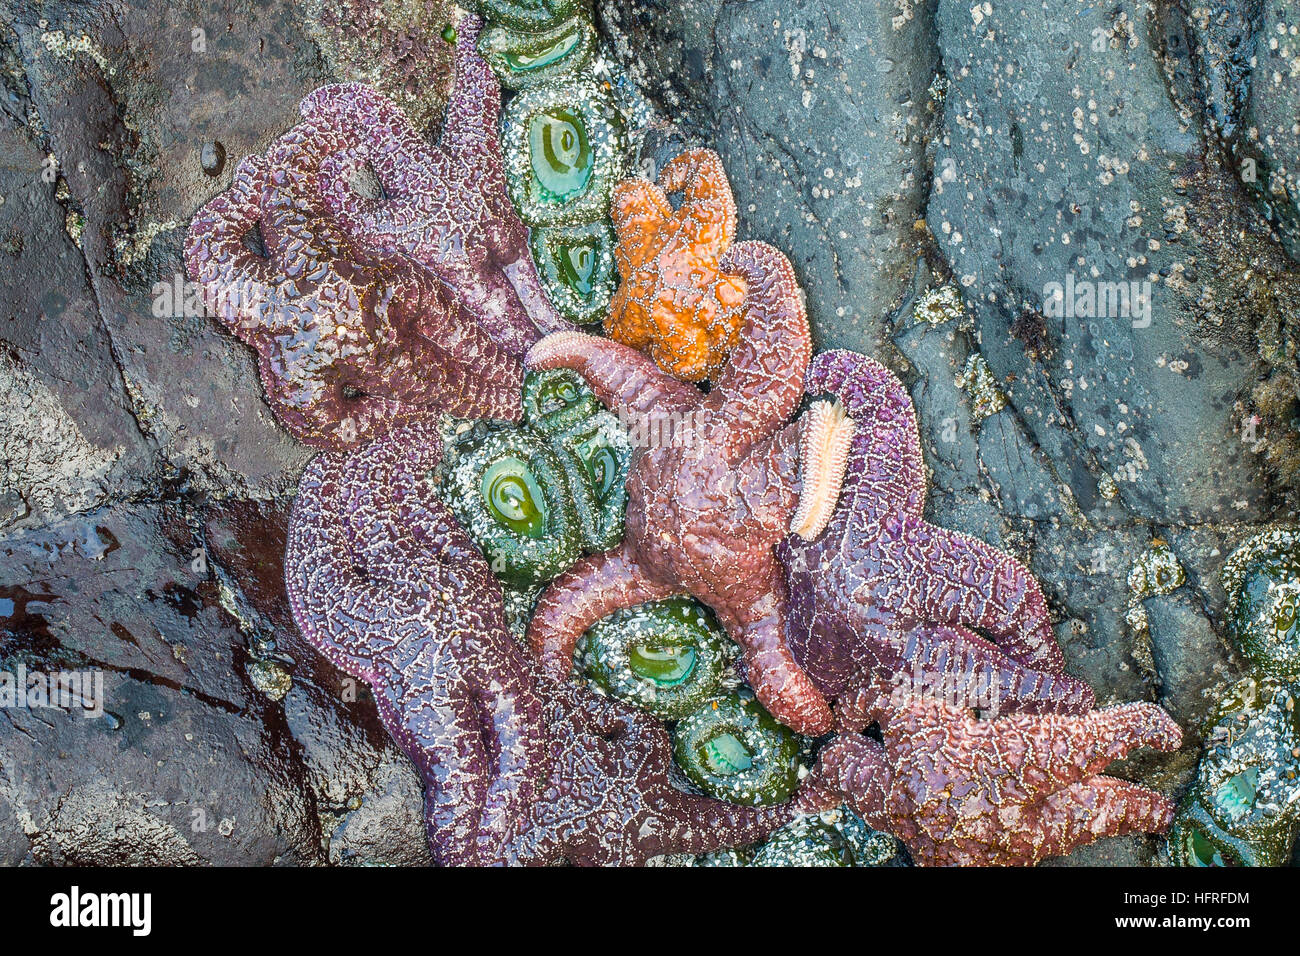 Group of sea stars and sea anemones. Stock Photo